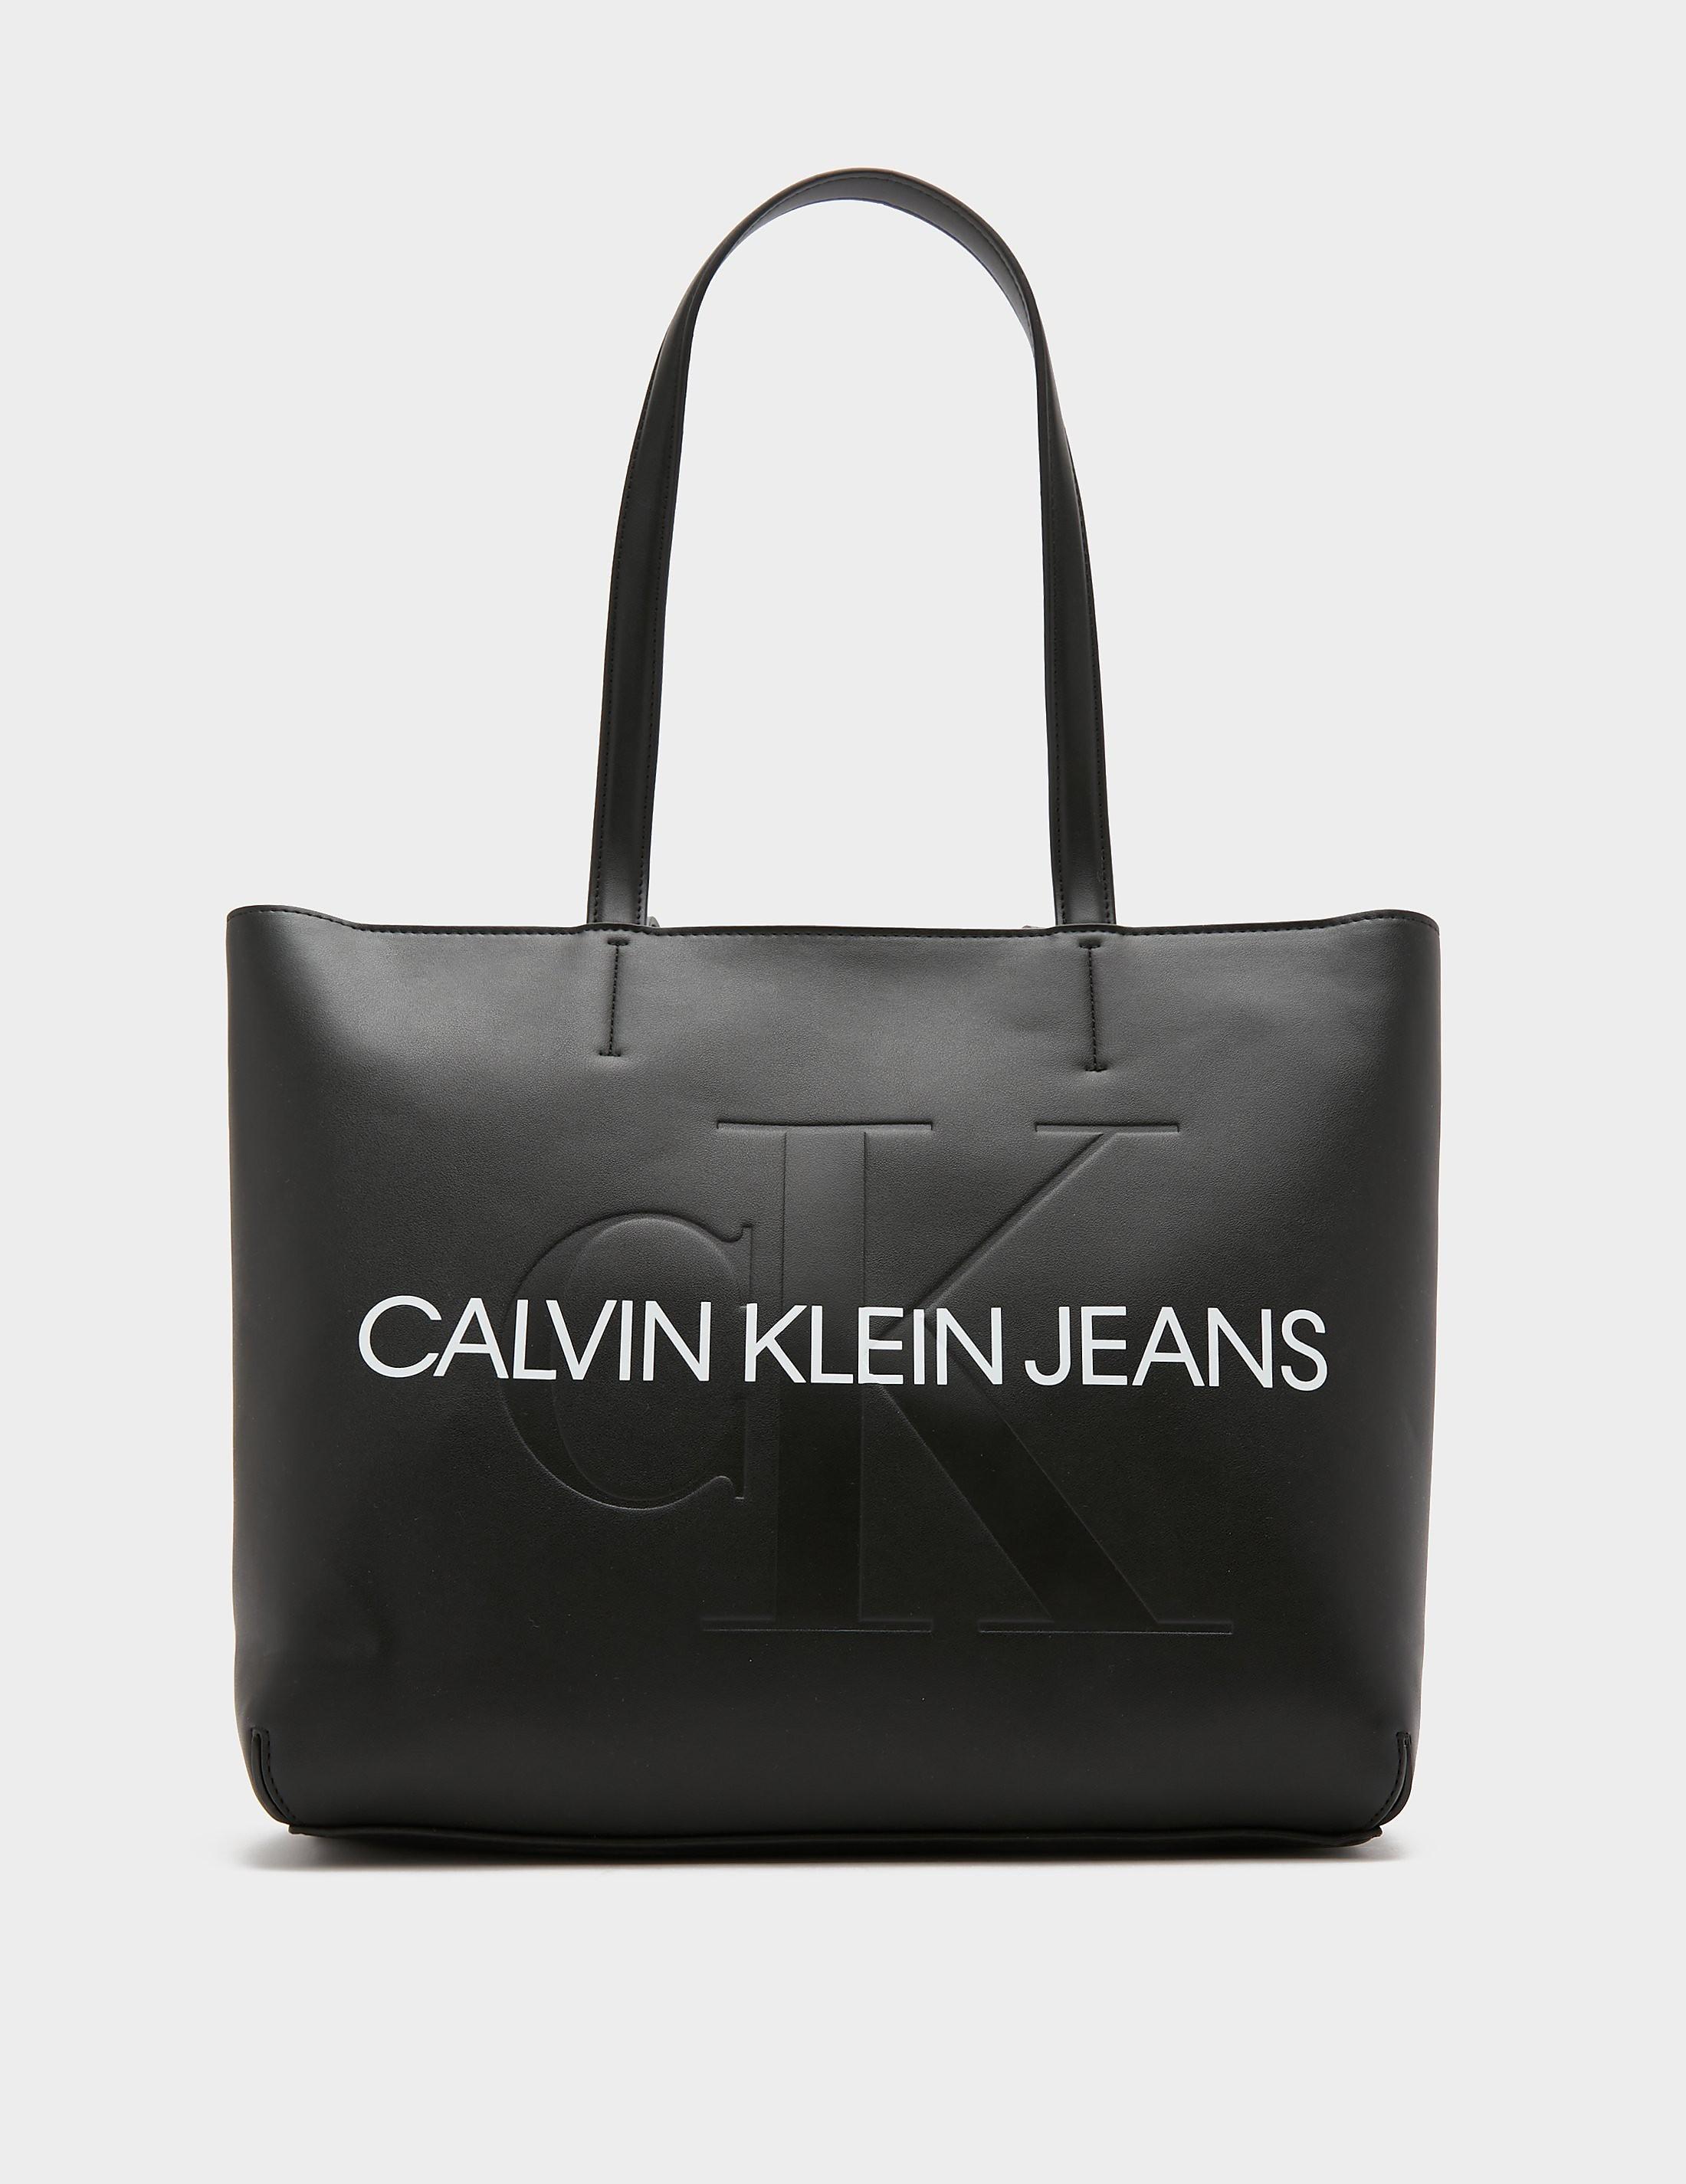 Rejoice erection Frustrating Calvin Klein Monogram Tote Bag in Black | Lyst